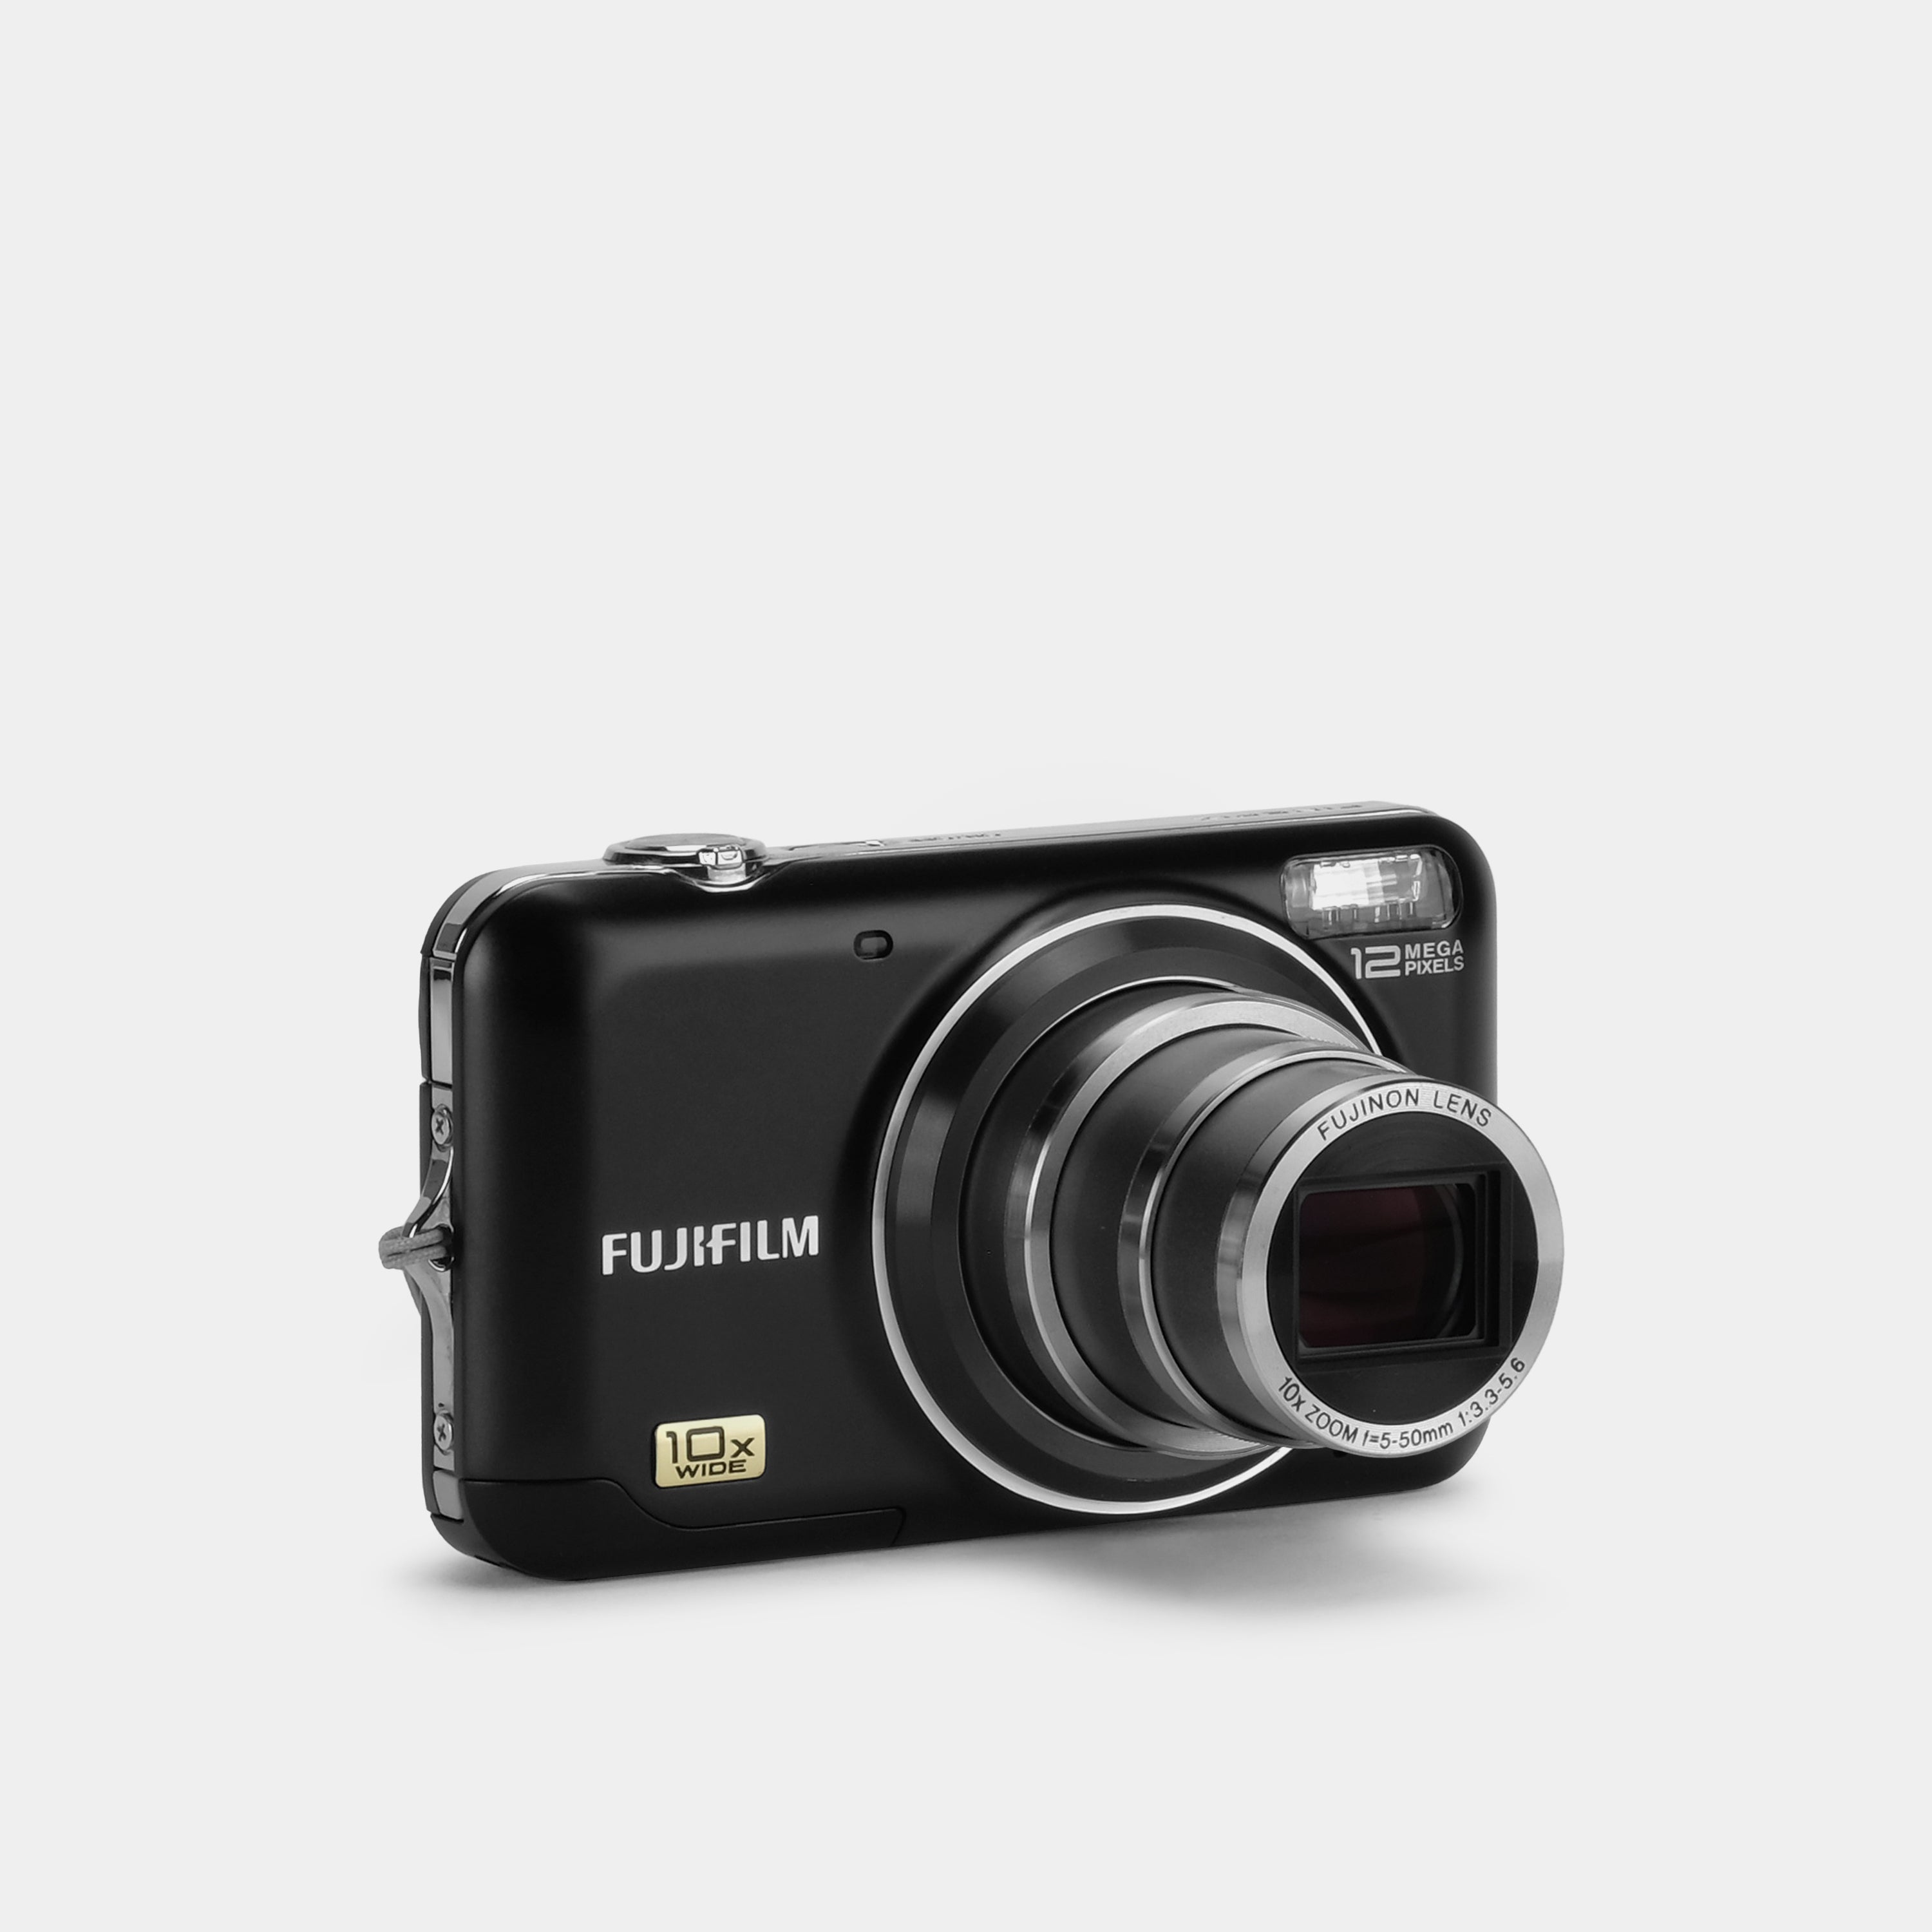 Fujifilm FinePix JZ300 Point and Shoot Digital Camera